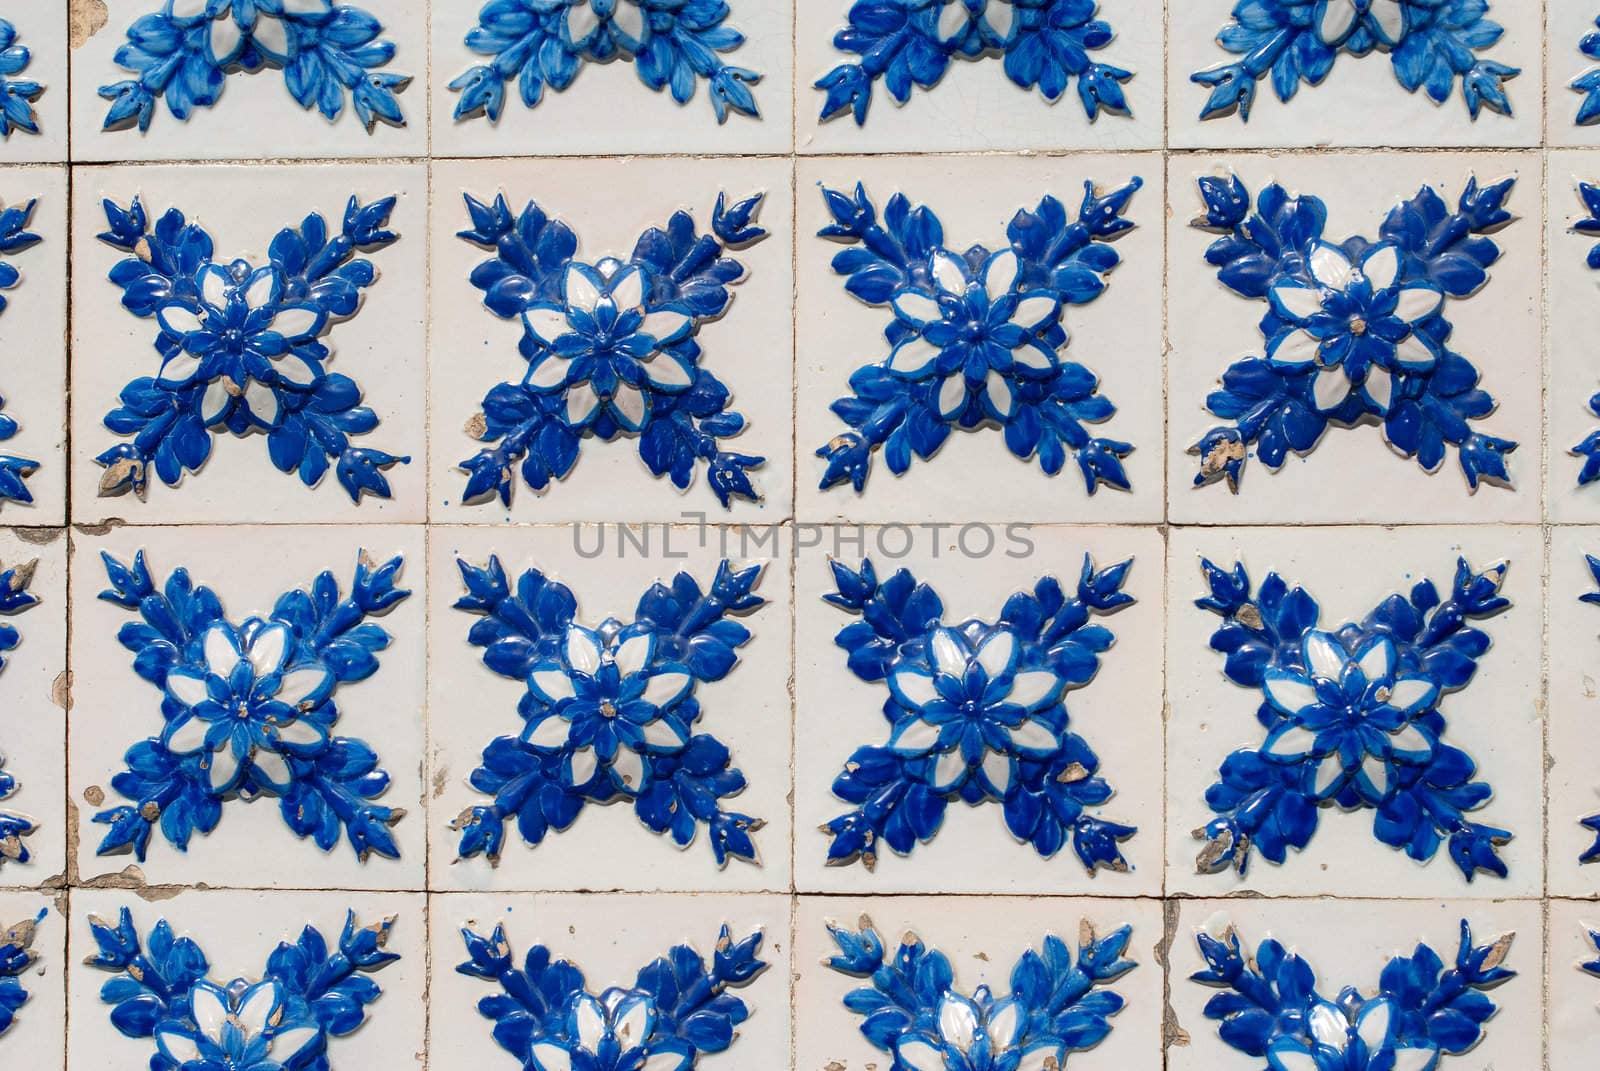 Portuguese glazed tiles 235 by homydesign